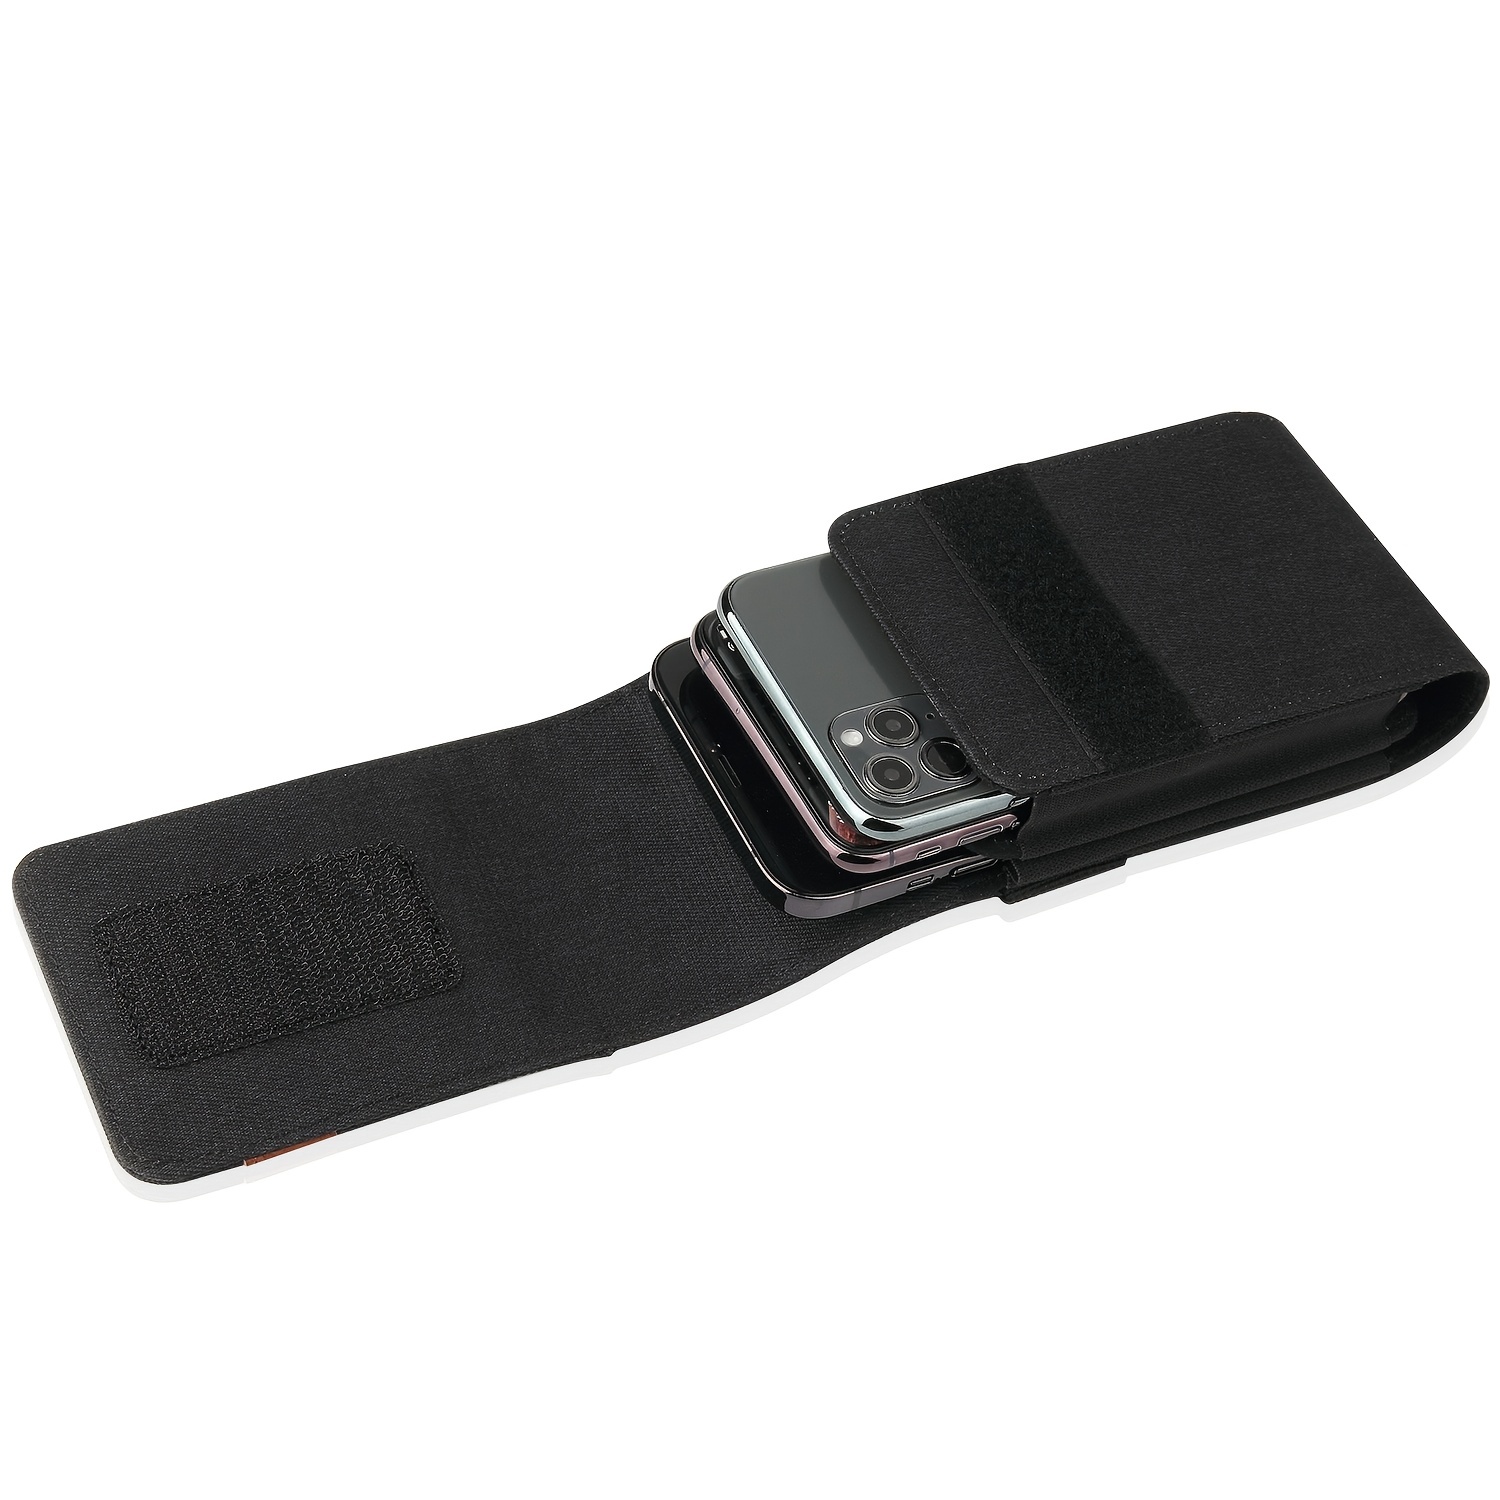 Vertical Dual Phone Holster Pouch Case Nylon Double Decker Belt